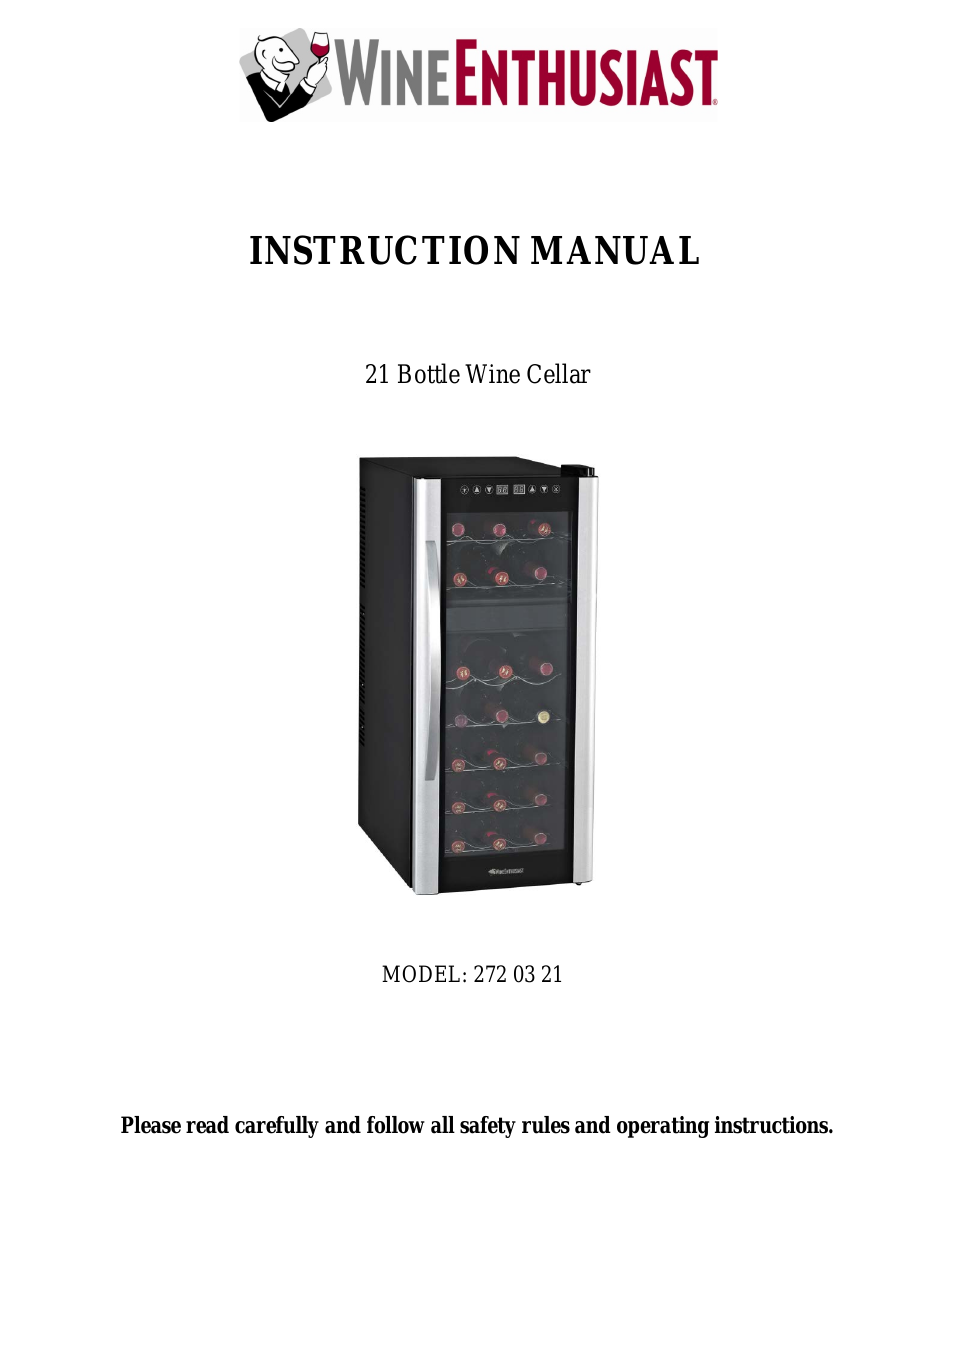 272 03 21 Silent 21 Bottle Dual Zone Touchscreen Wine Refrigerator